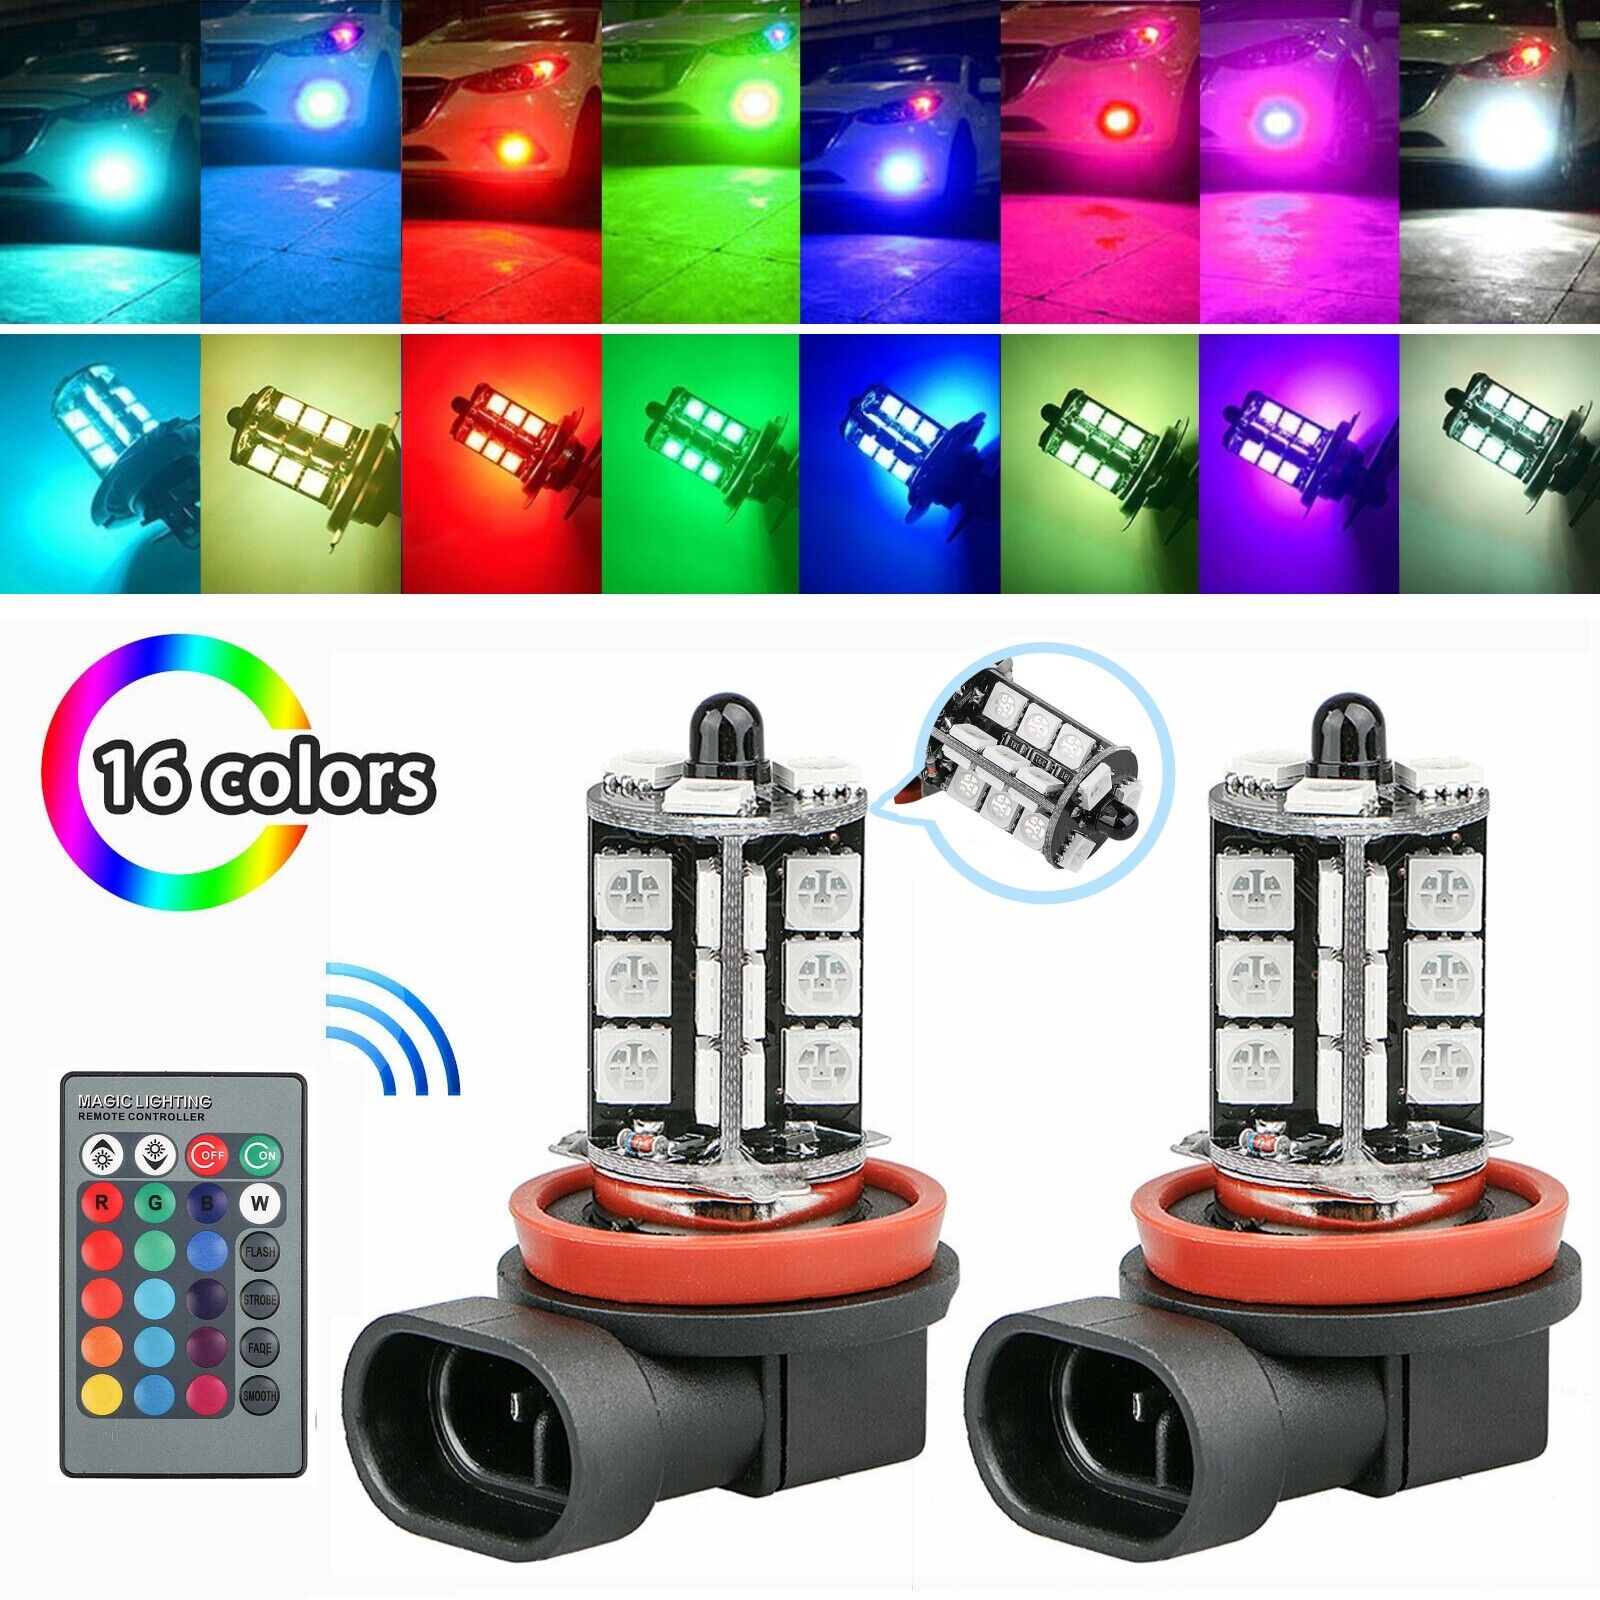 2pcs H8 H9 H11 LED Fog Light Bulbs 16 Color Changing RGB Remote High Power Lamp